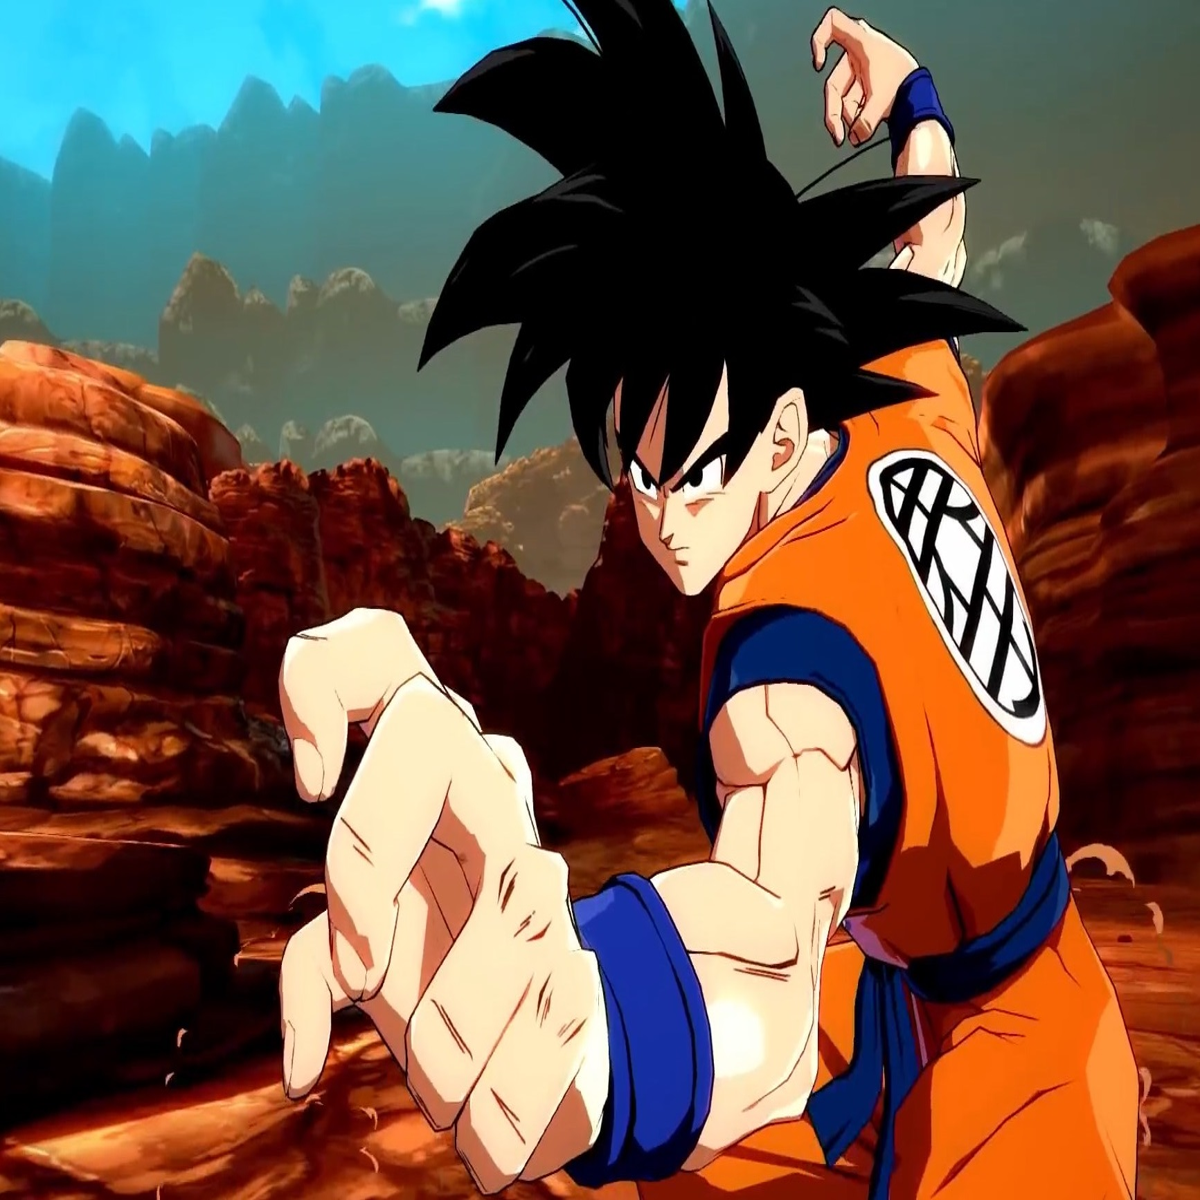 Watch Dragon Ball FighterZ SSGSS Goku Gameplay